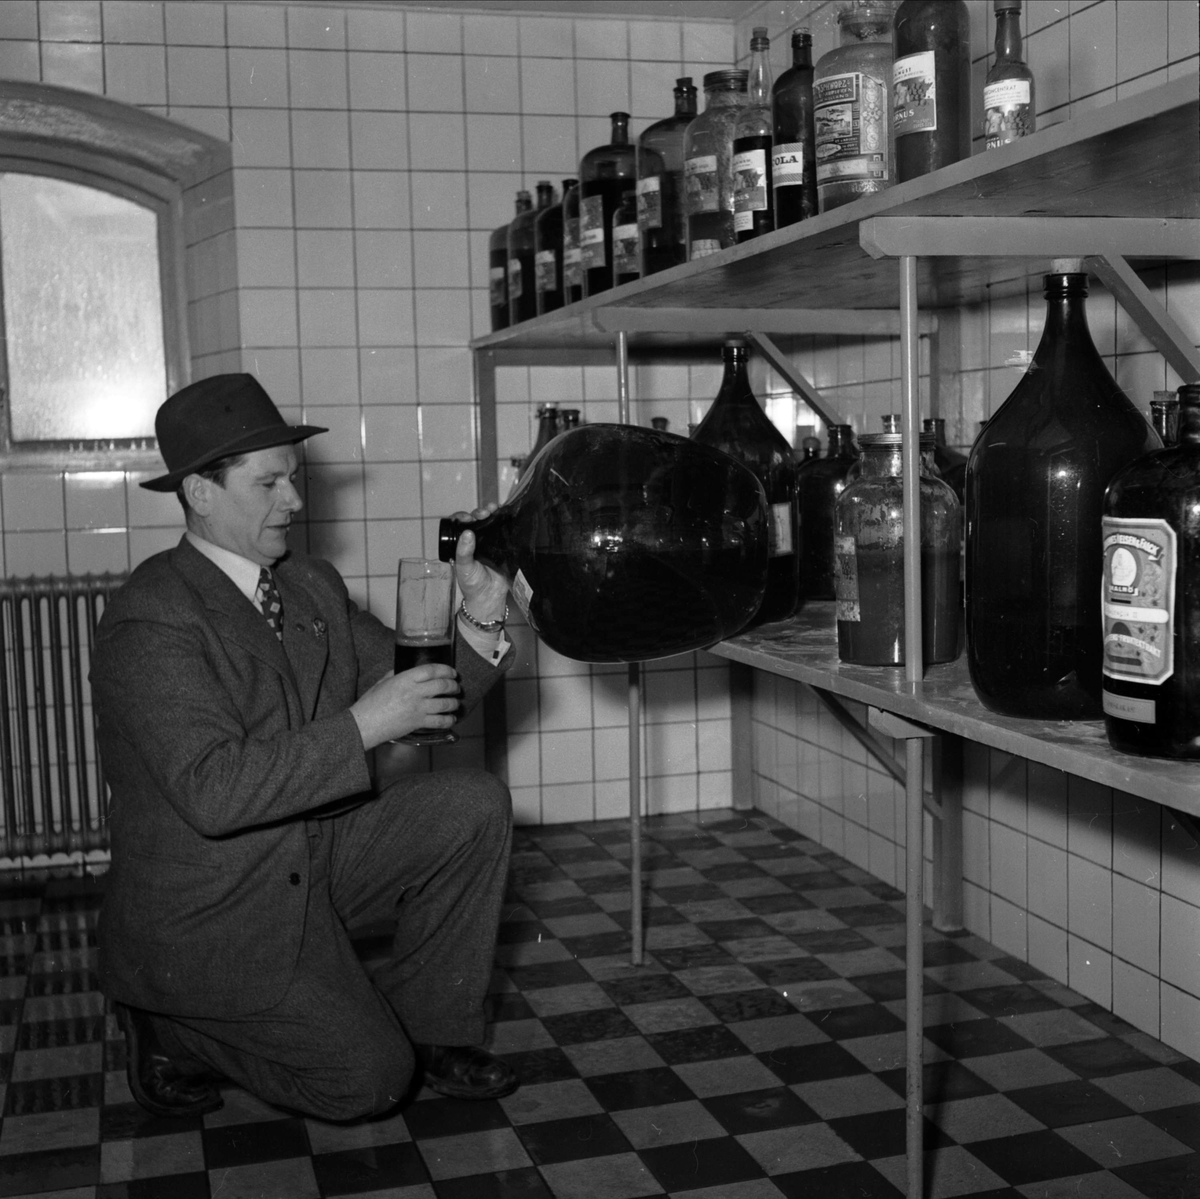 "Mejeri blev bryggeri", Storvreta Bryggeri, Rasbo, Uppland 1951. Sannolikt ägaren Rune Andersson i laboratoriet